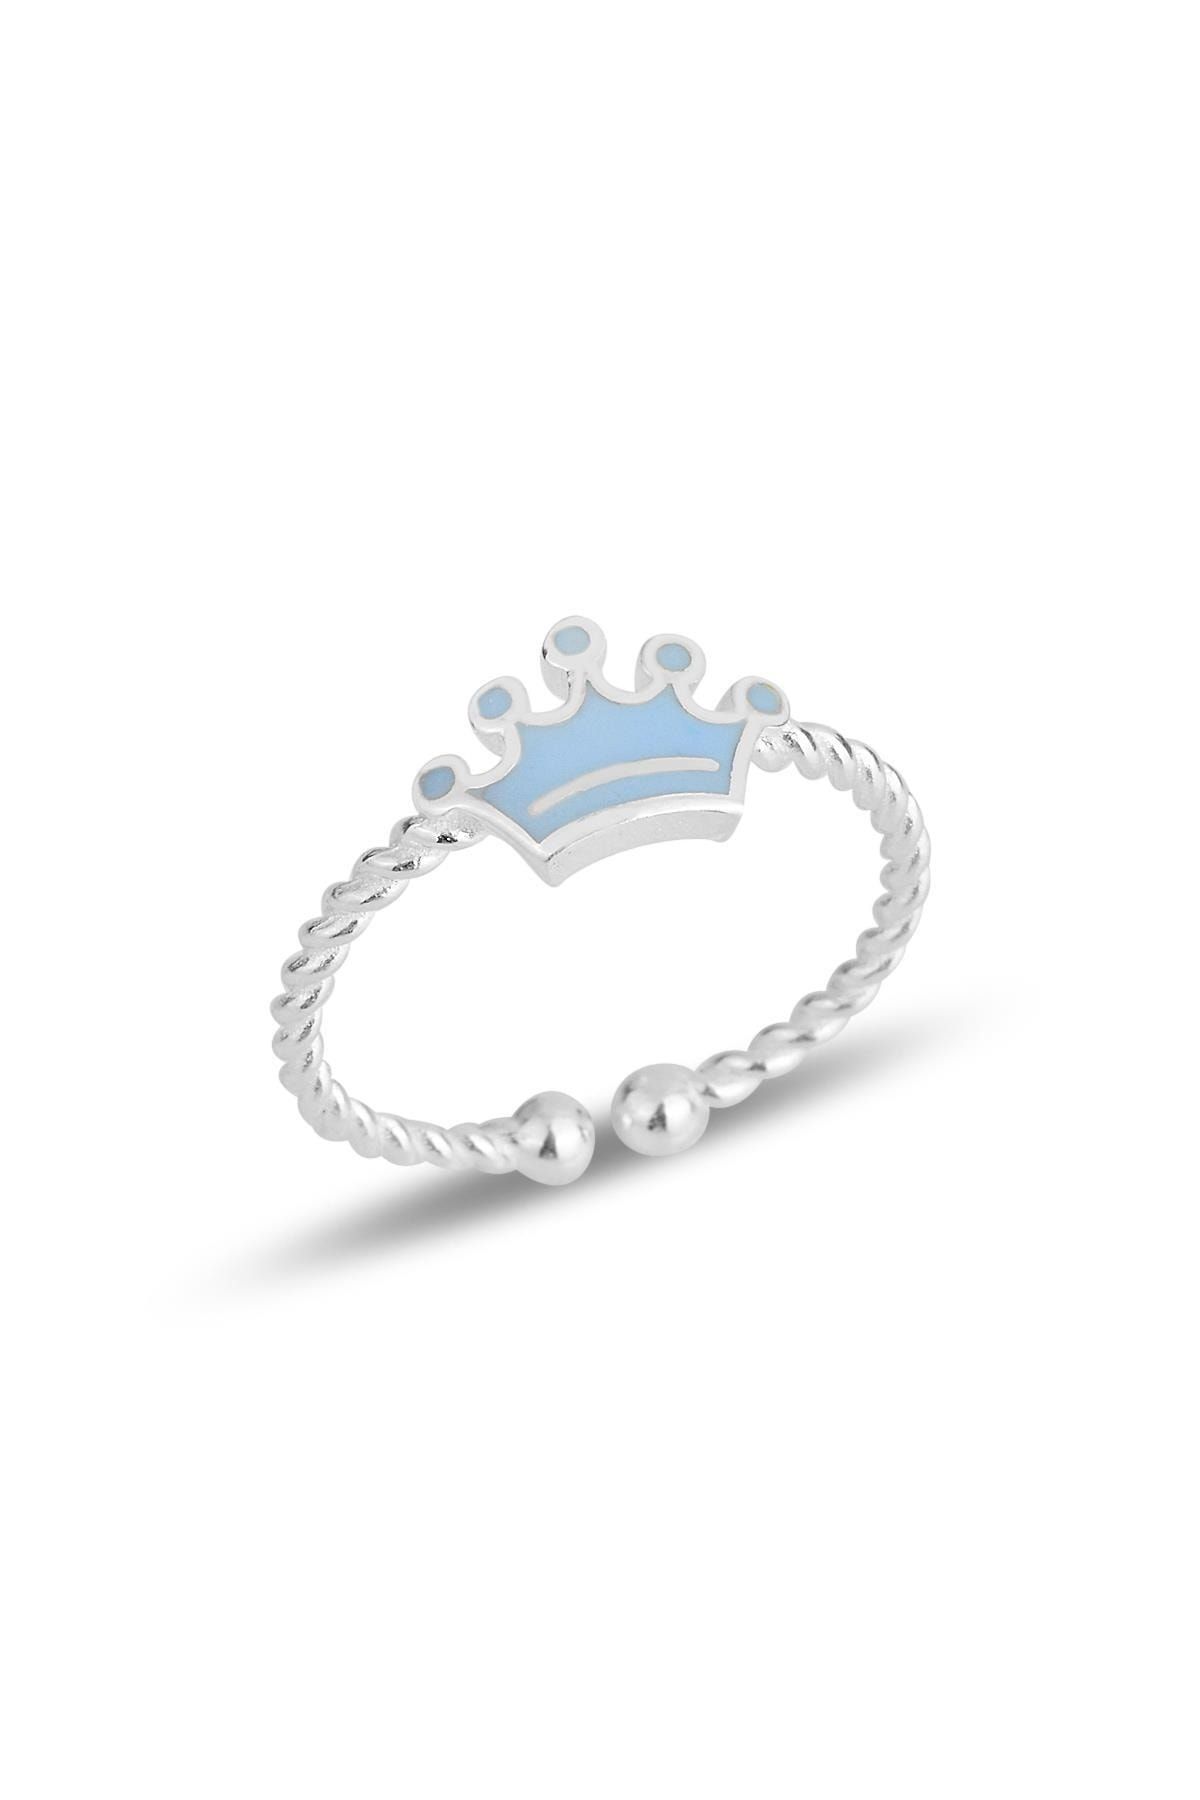 Söğütlü Silver Gümüş Mavi Mineli Taç Ayarlamalı Çocuk Yüzüğü